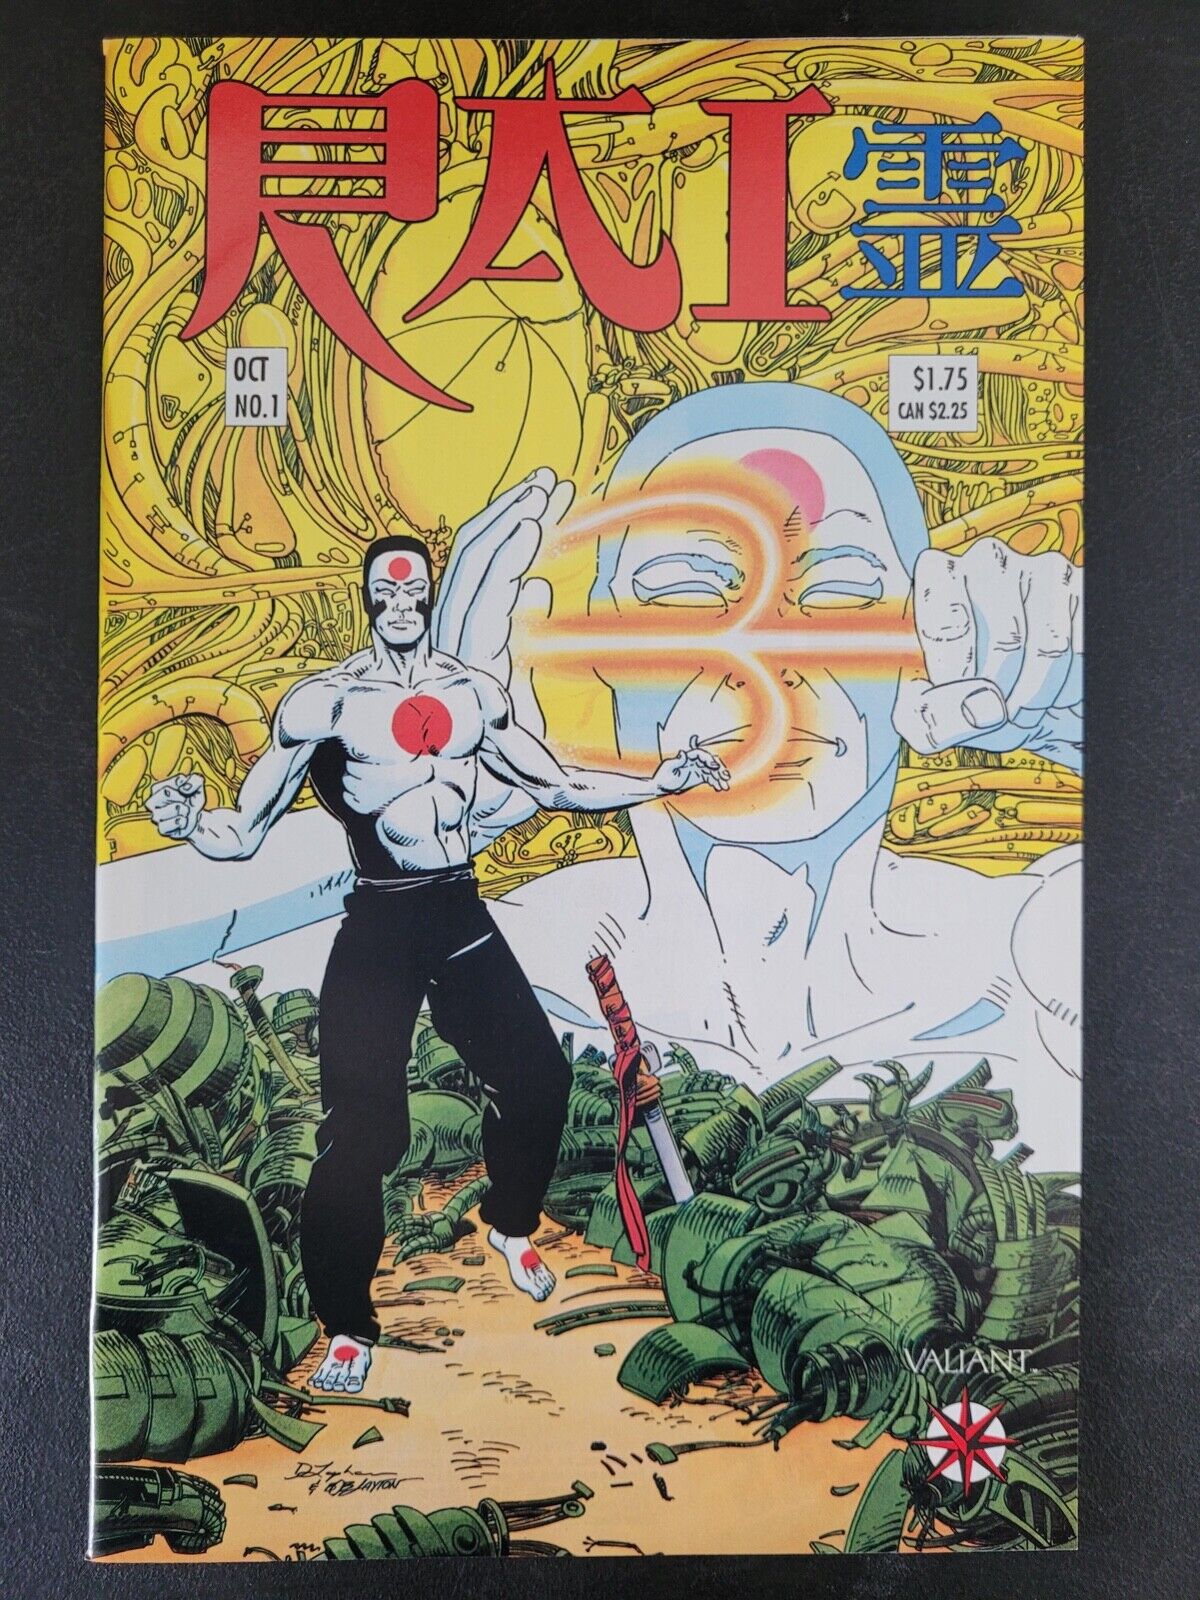 MAGNUS ROBOT FIGHTER #5 (1991) VALIANT COMICS GRANDMOTHER 1ST APPEARANCE OF RAI